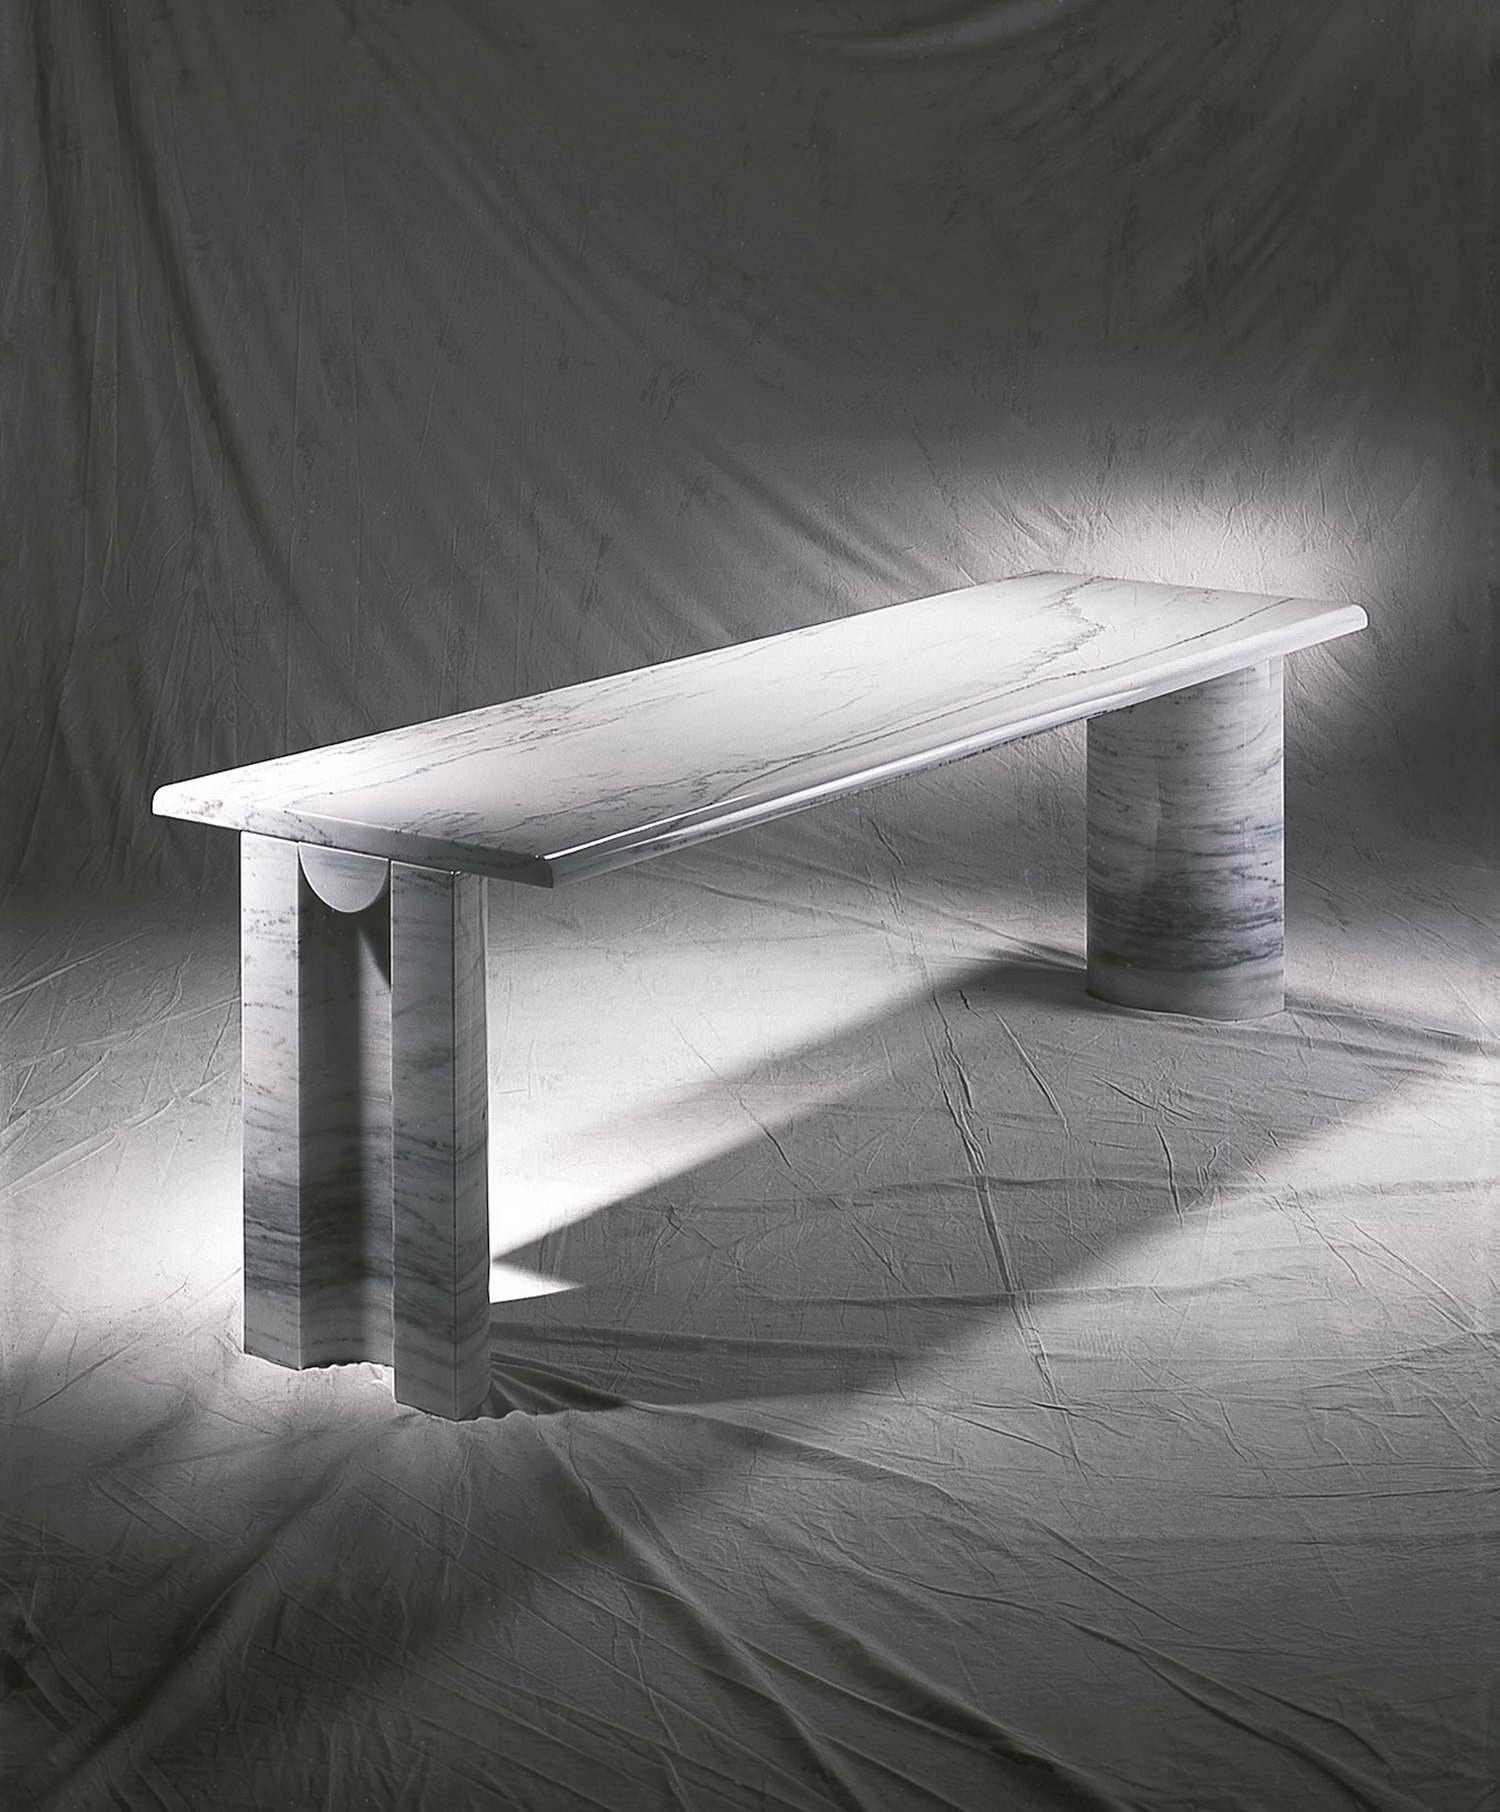 Name: Pariana.
Marble Dining table.
Size: Cm 220 x 70 x H 73.
Materials: Bianco carrara, nero marquina
Designer: P.A Giusti, E. Di Rosa.